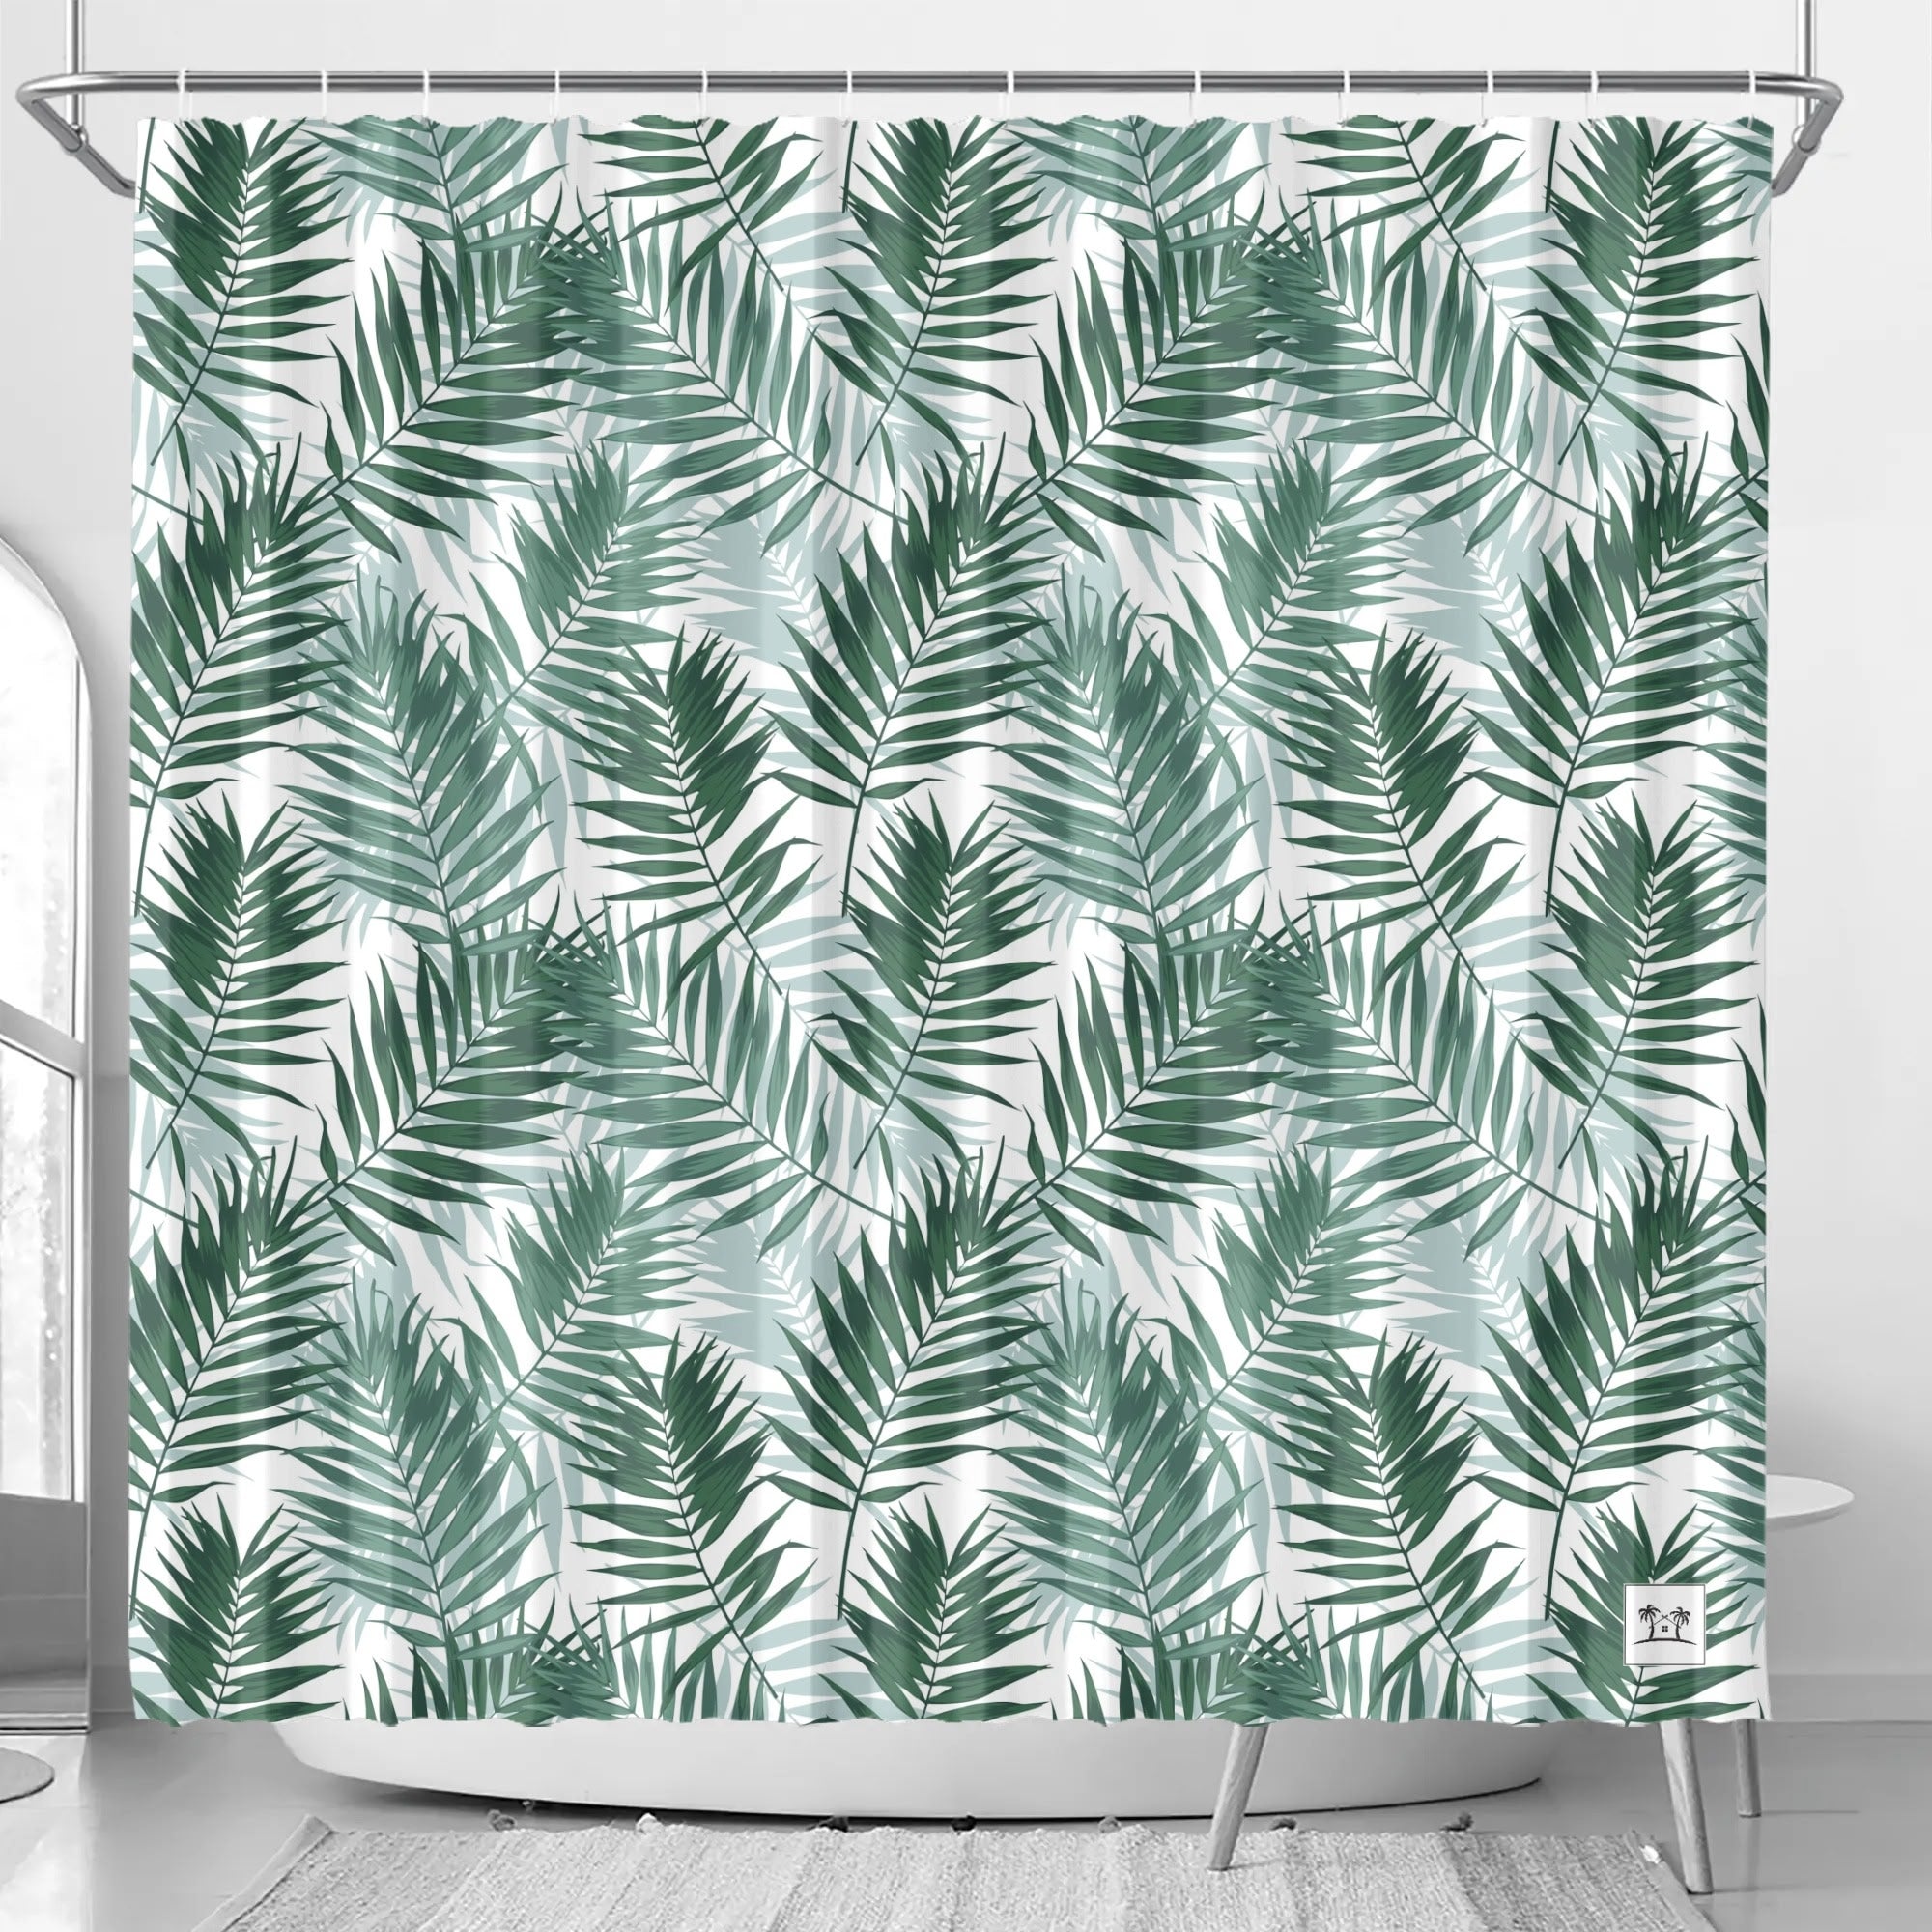 Waterproof Shower Curtain - Emerald Palms